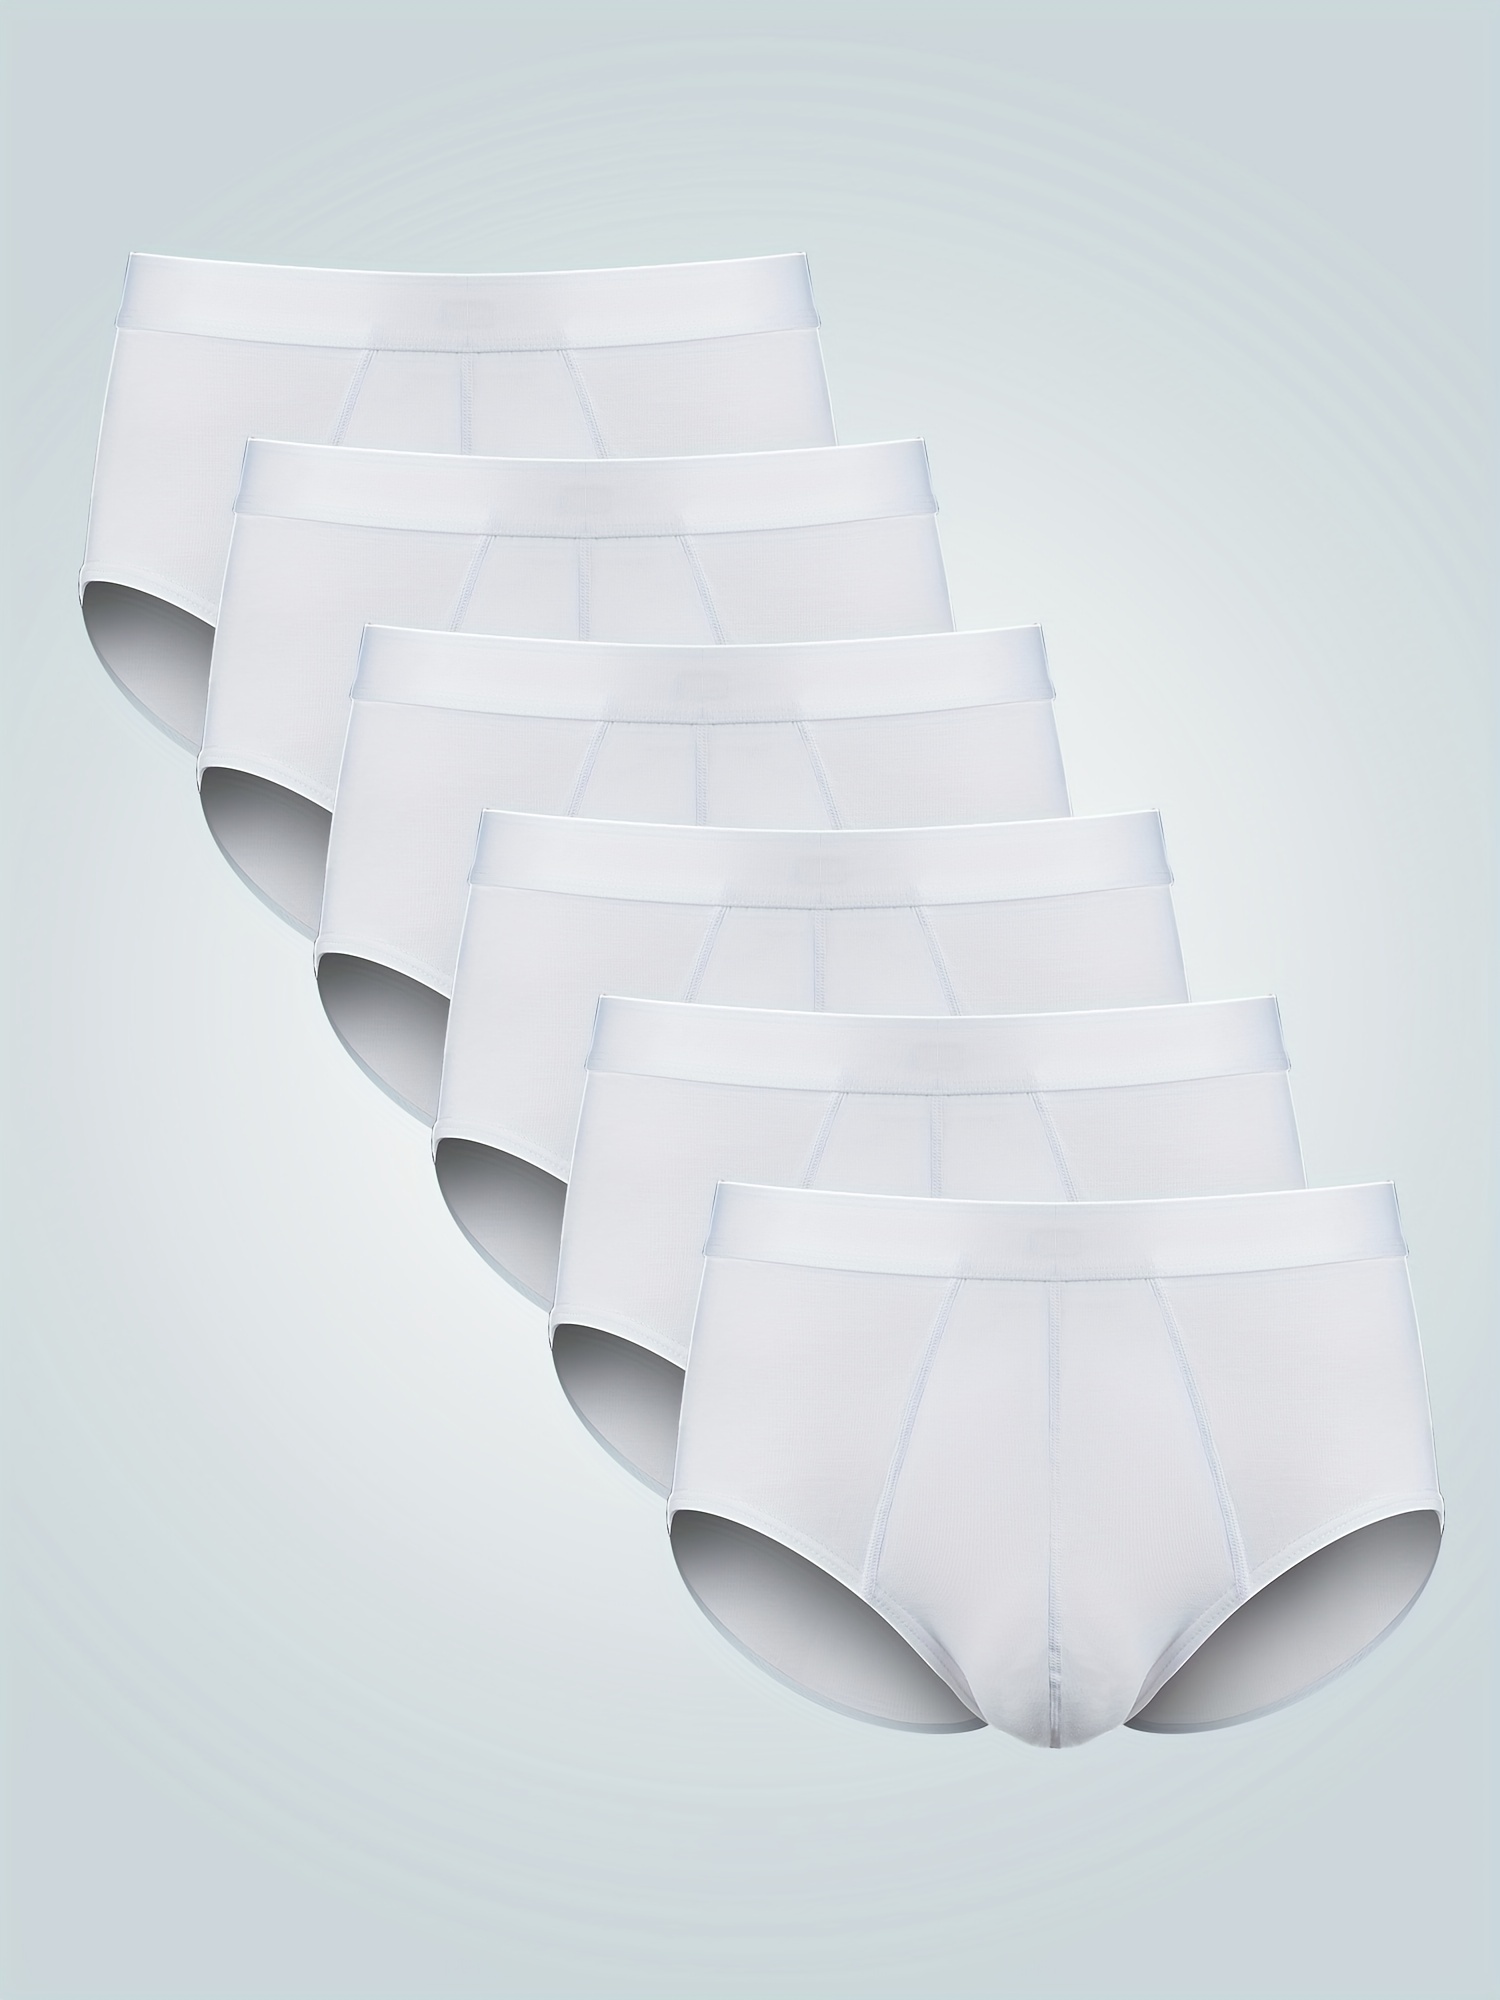 BANANA TRIP, Disposable Cotton Men's Briefs L 5 Pack│Travel Portable  Underwear│Cotton Underwear│Travel, Size : L